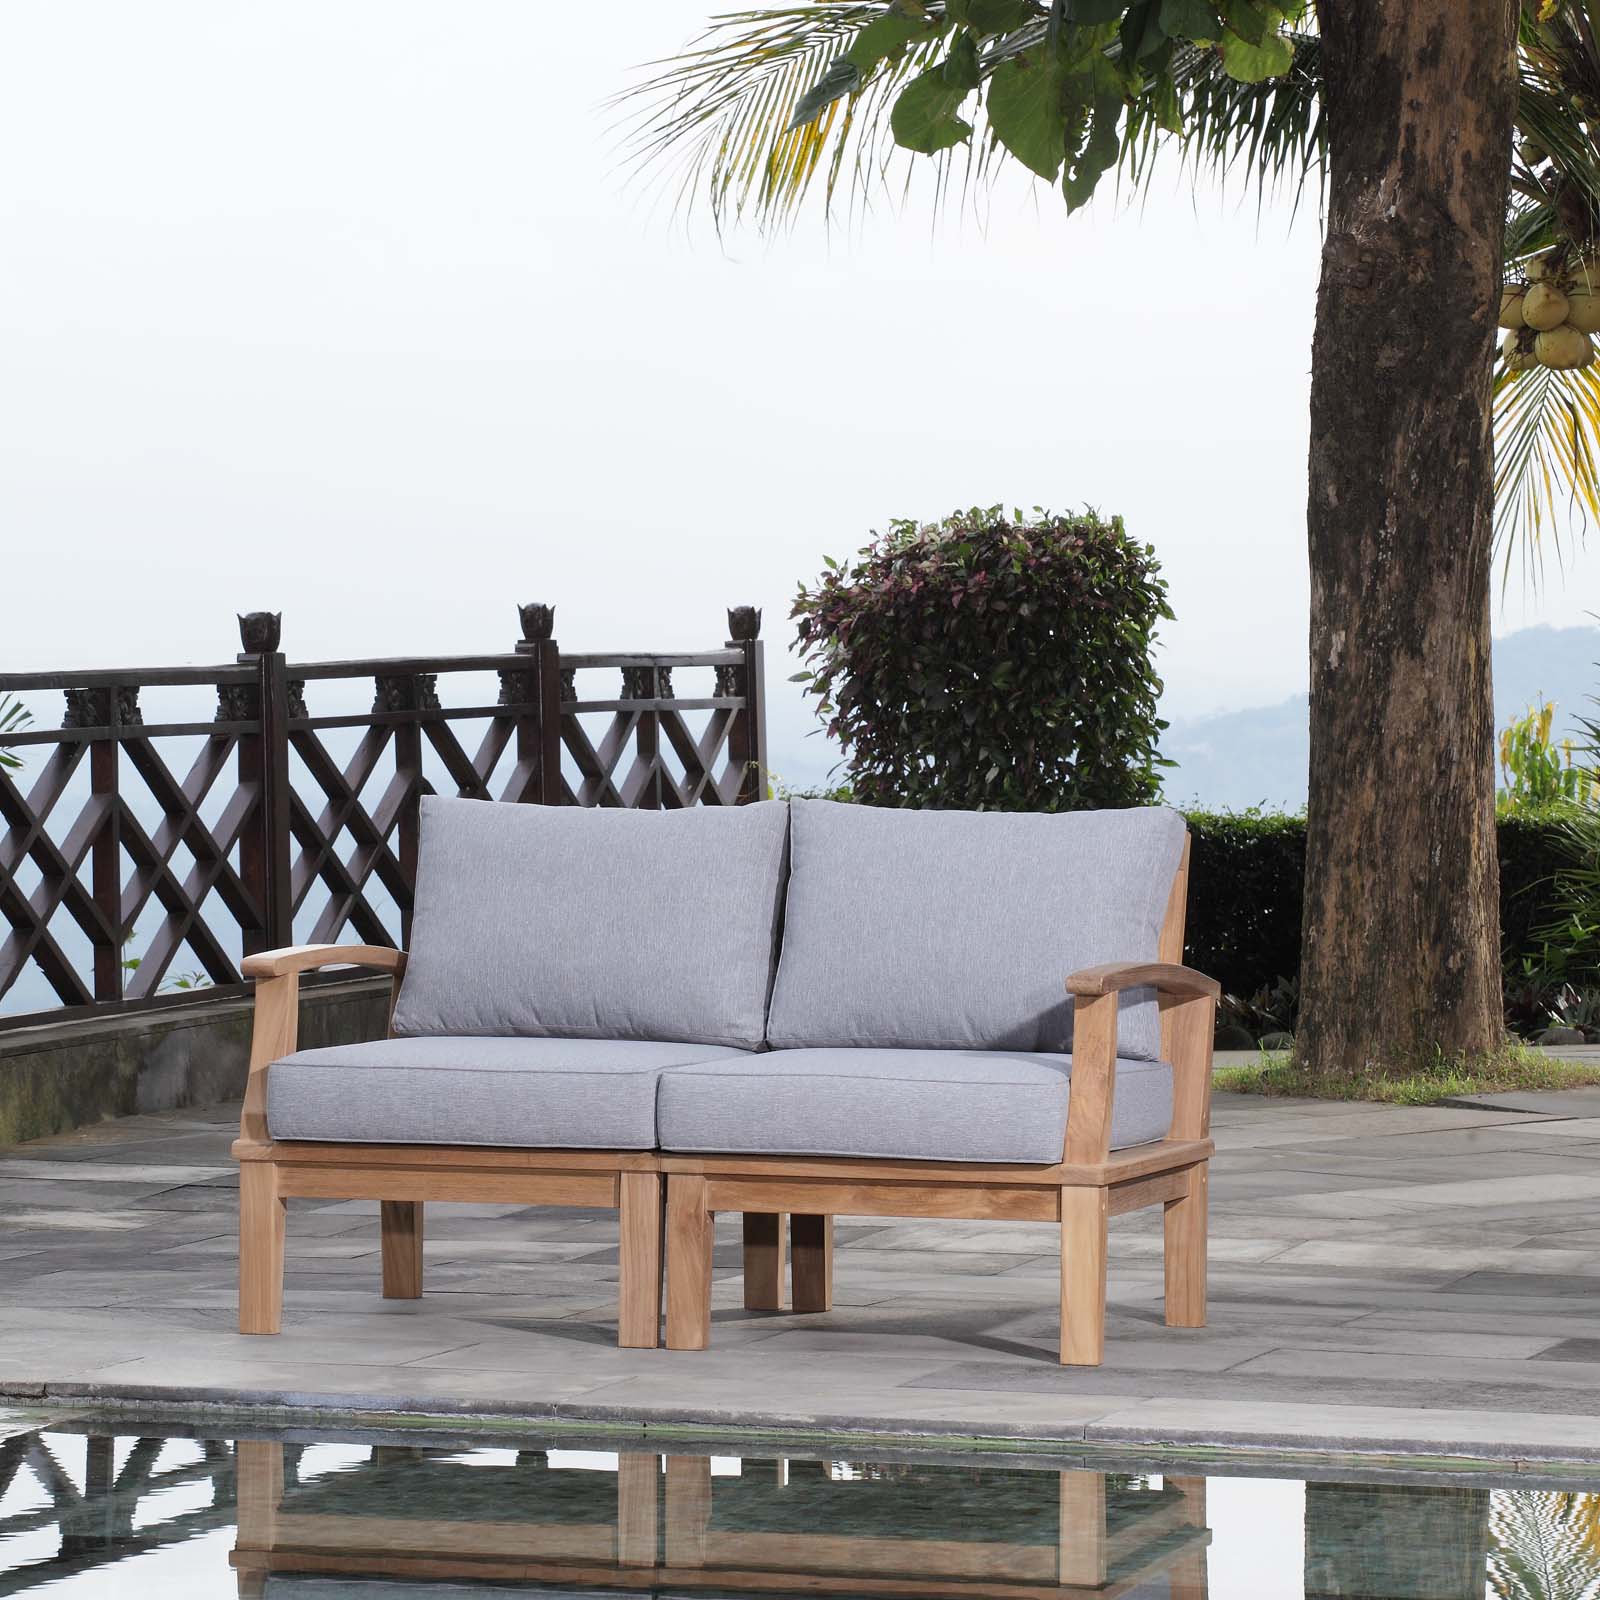 Modern Contemporary Urban Design Outdoor Patio Balcony Garden Furniture Lounge Chair Set, Wood, Grey Gray Natural - image 5 of 6